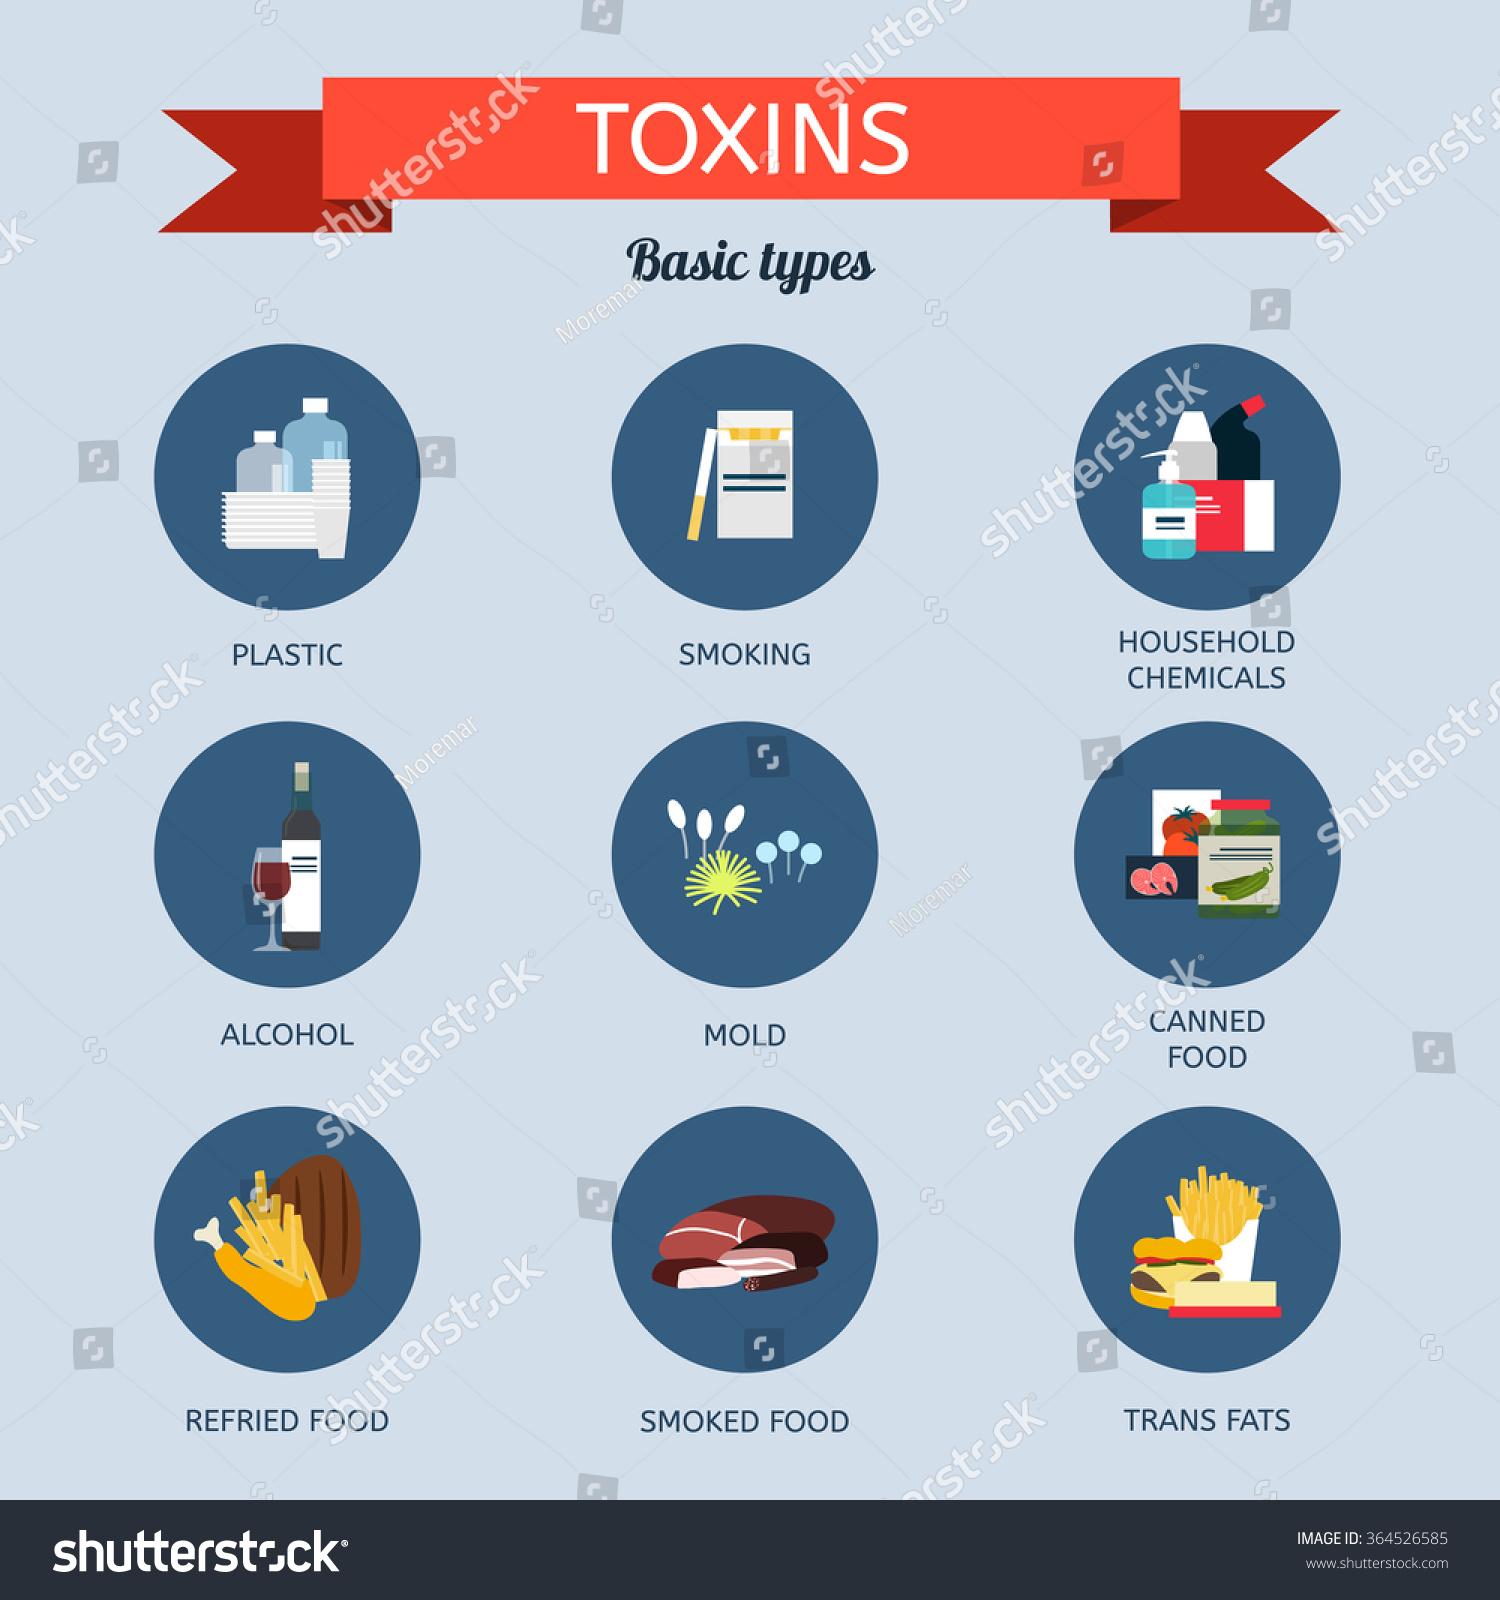 toxine in the body